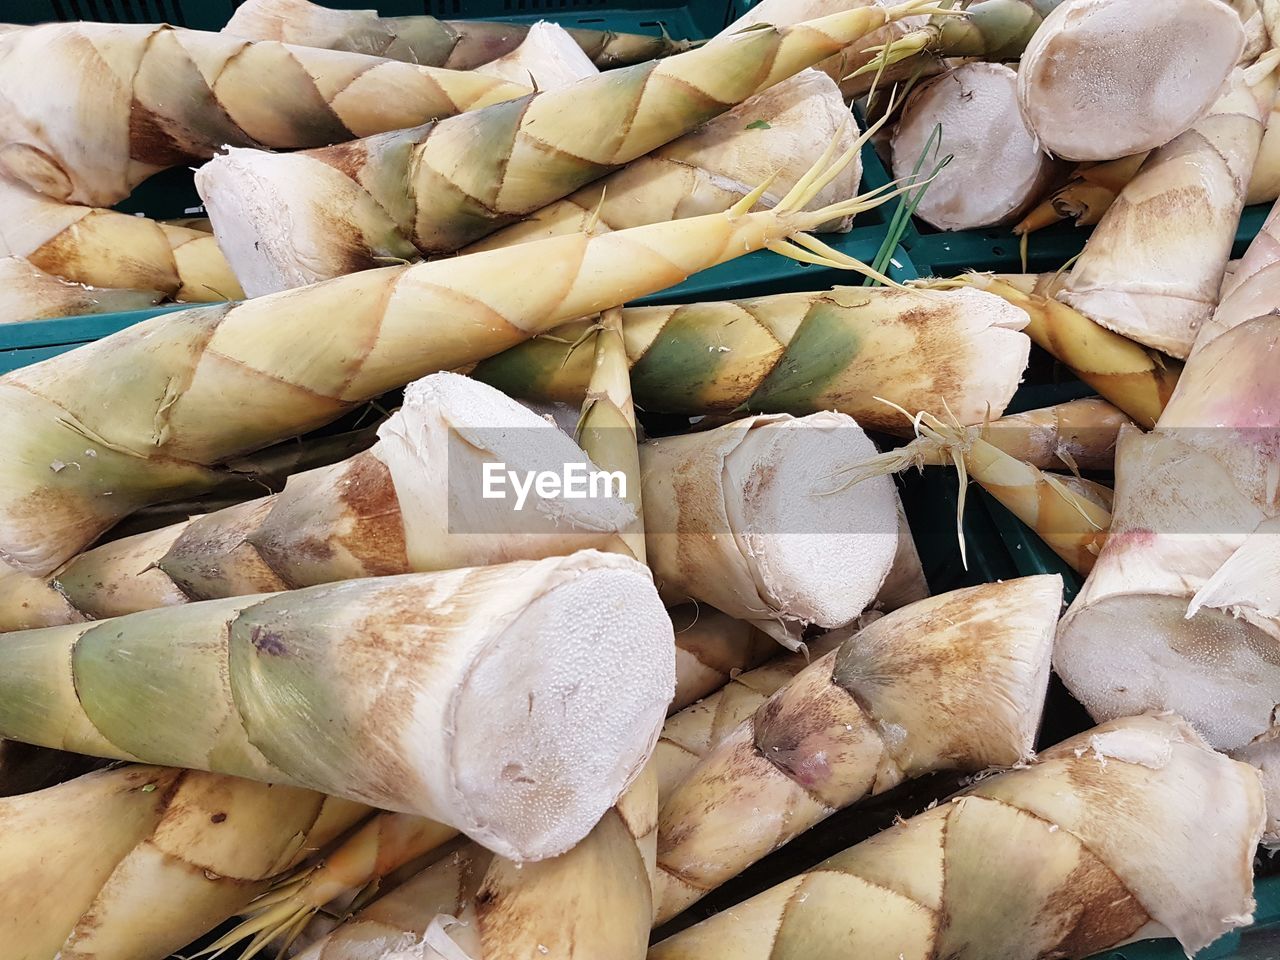 Close-up of bamboo shoots